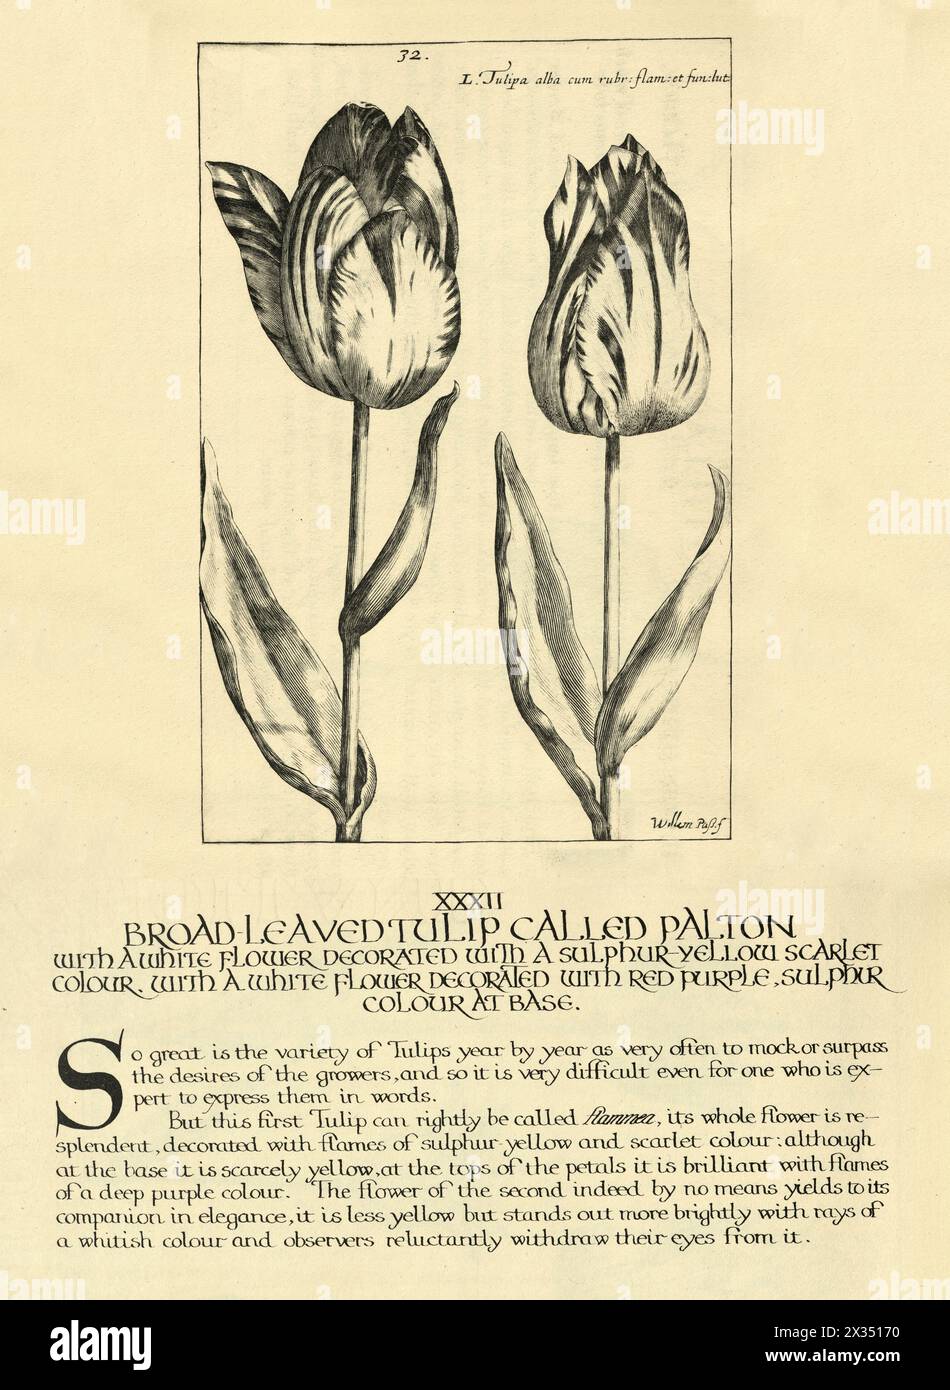 Botanical art print of broad leaved tulip called palton, from Hortus Floridus by Crispin de Passe, Vintage illustration, 17th Century Stock Photo